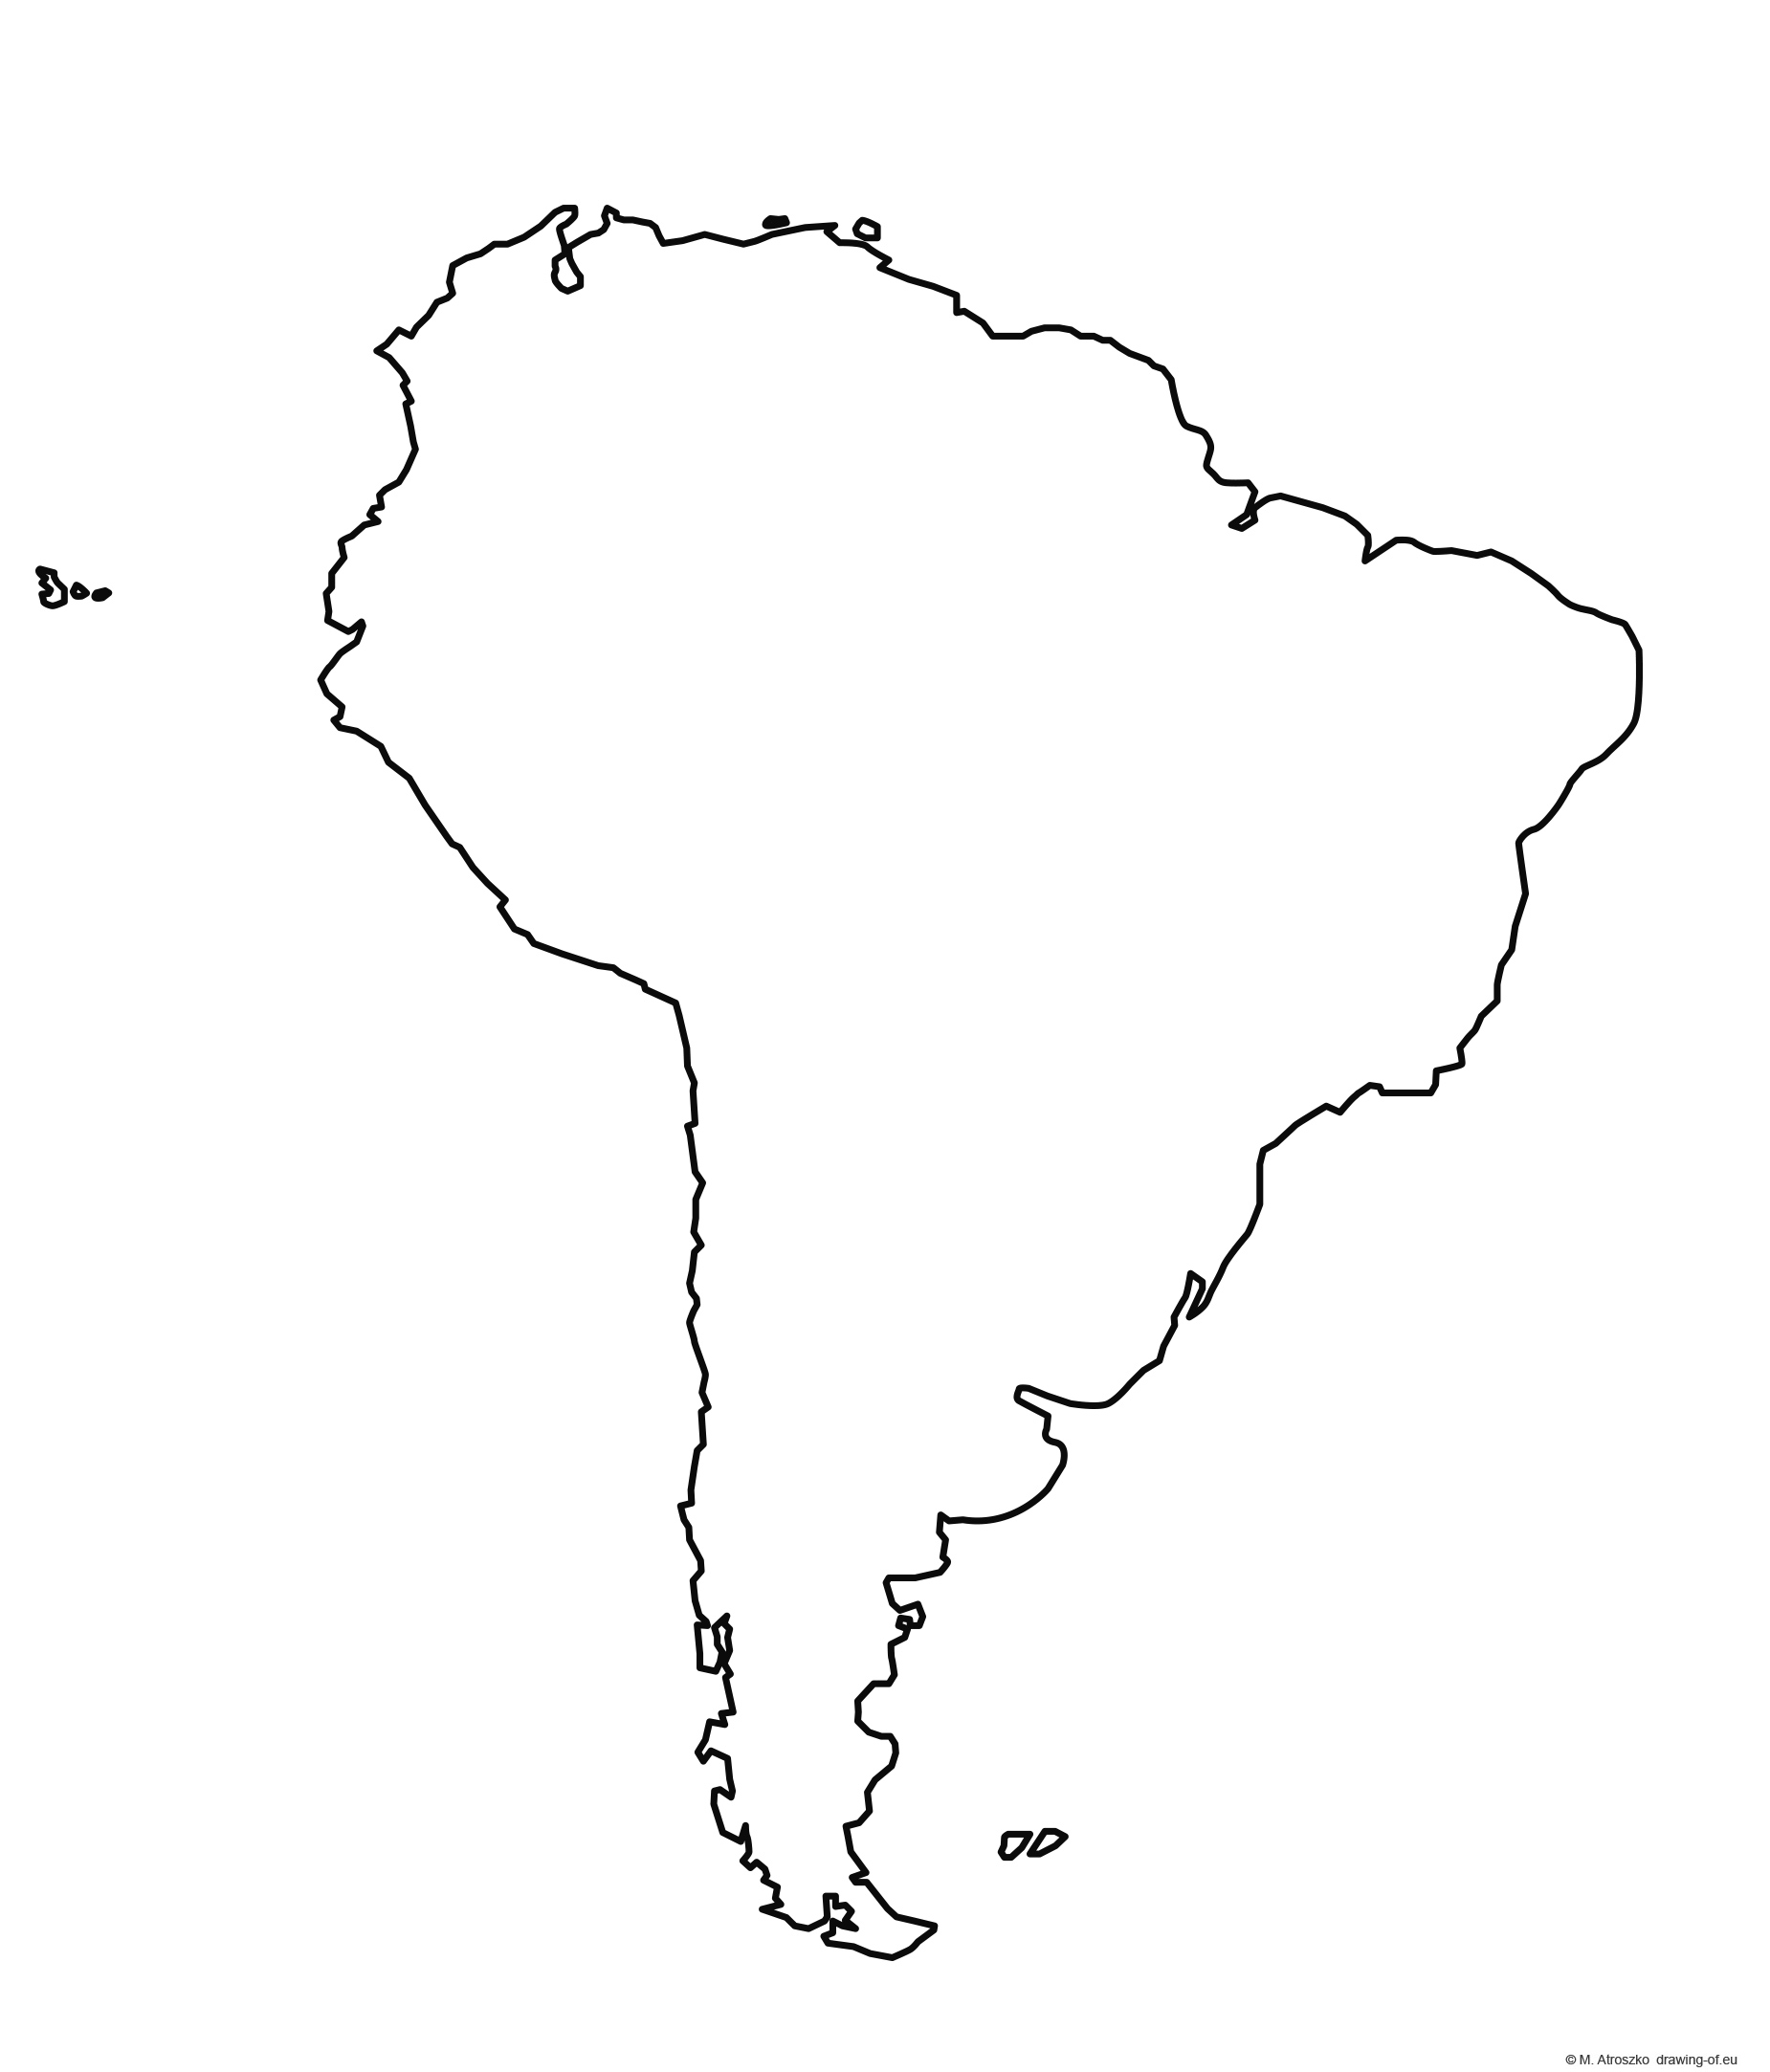 Contour map of South America